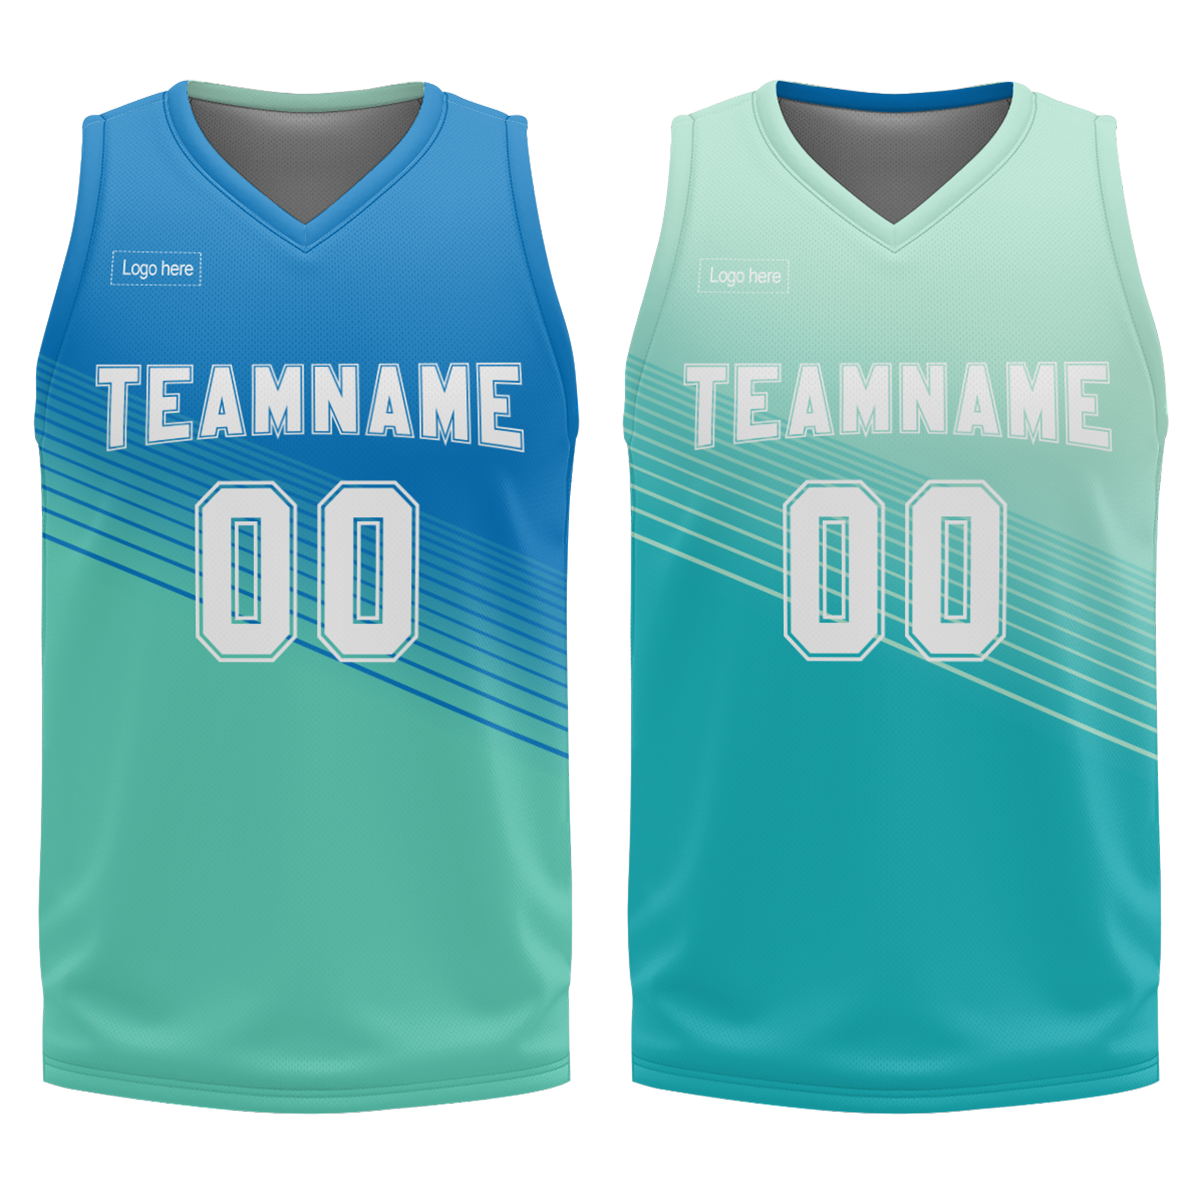 multiple-design-reversible-basketball-jerseys-your-own-print-custom-logo-basketball-uniform-suits-at-cj-pod-4